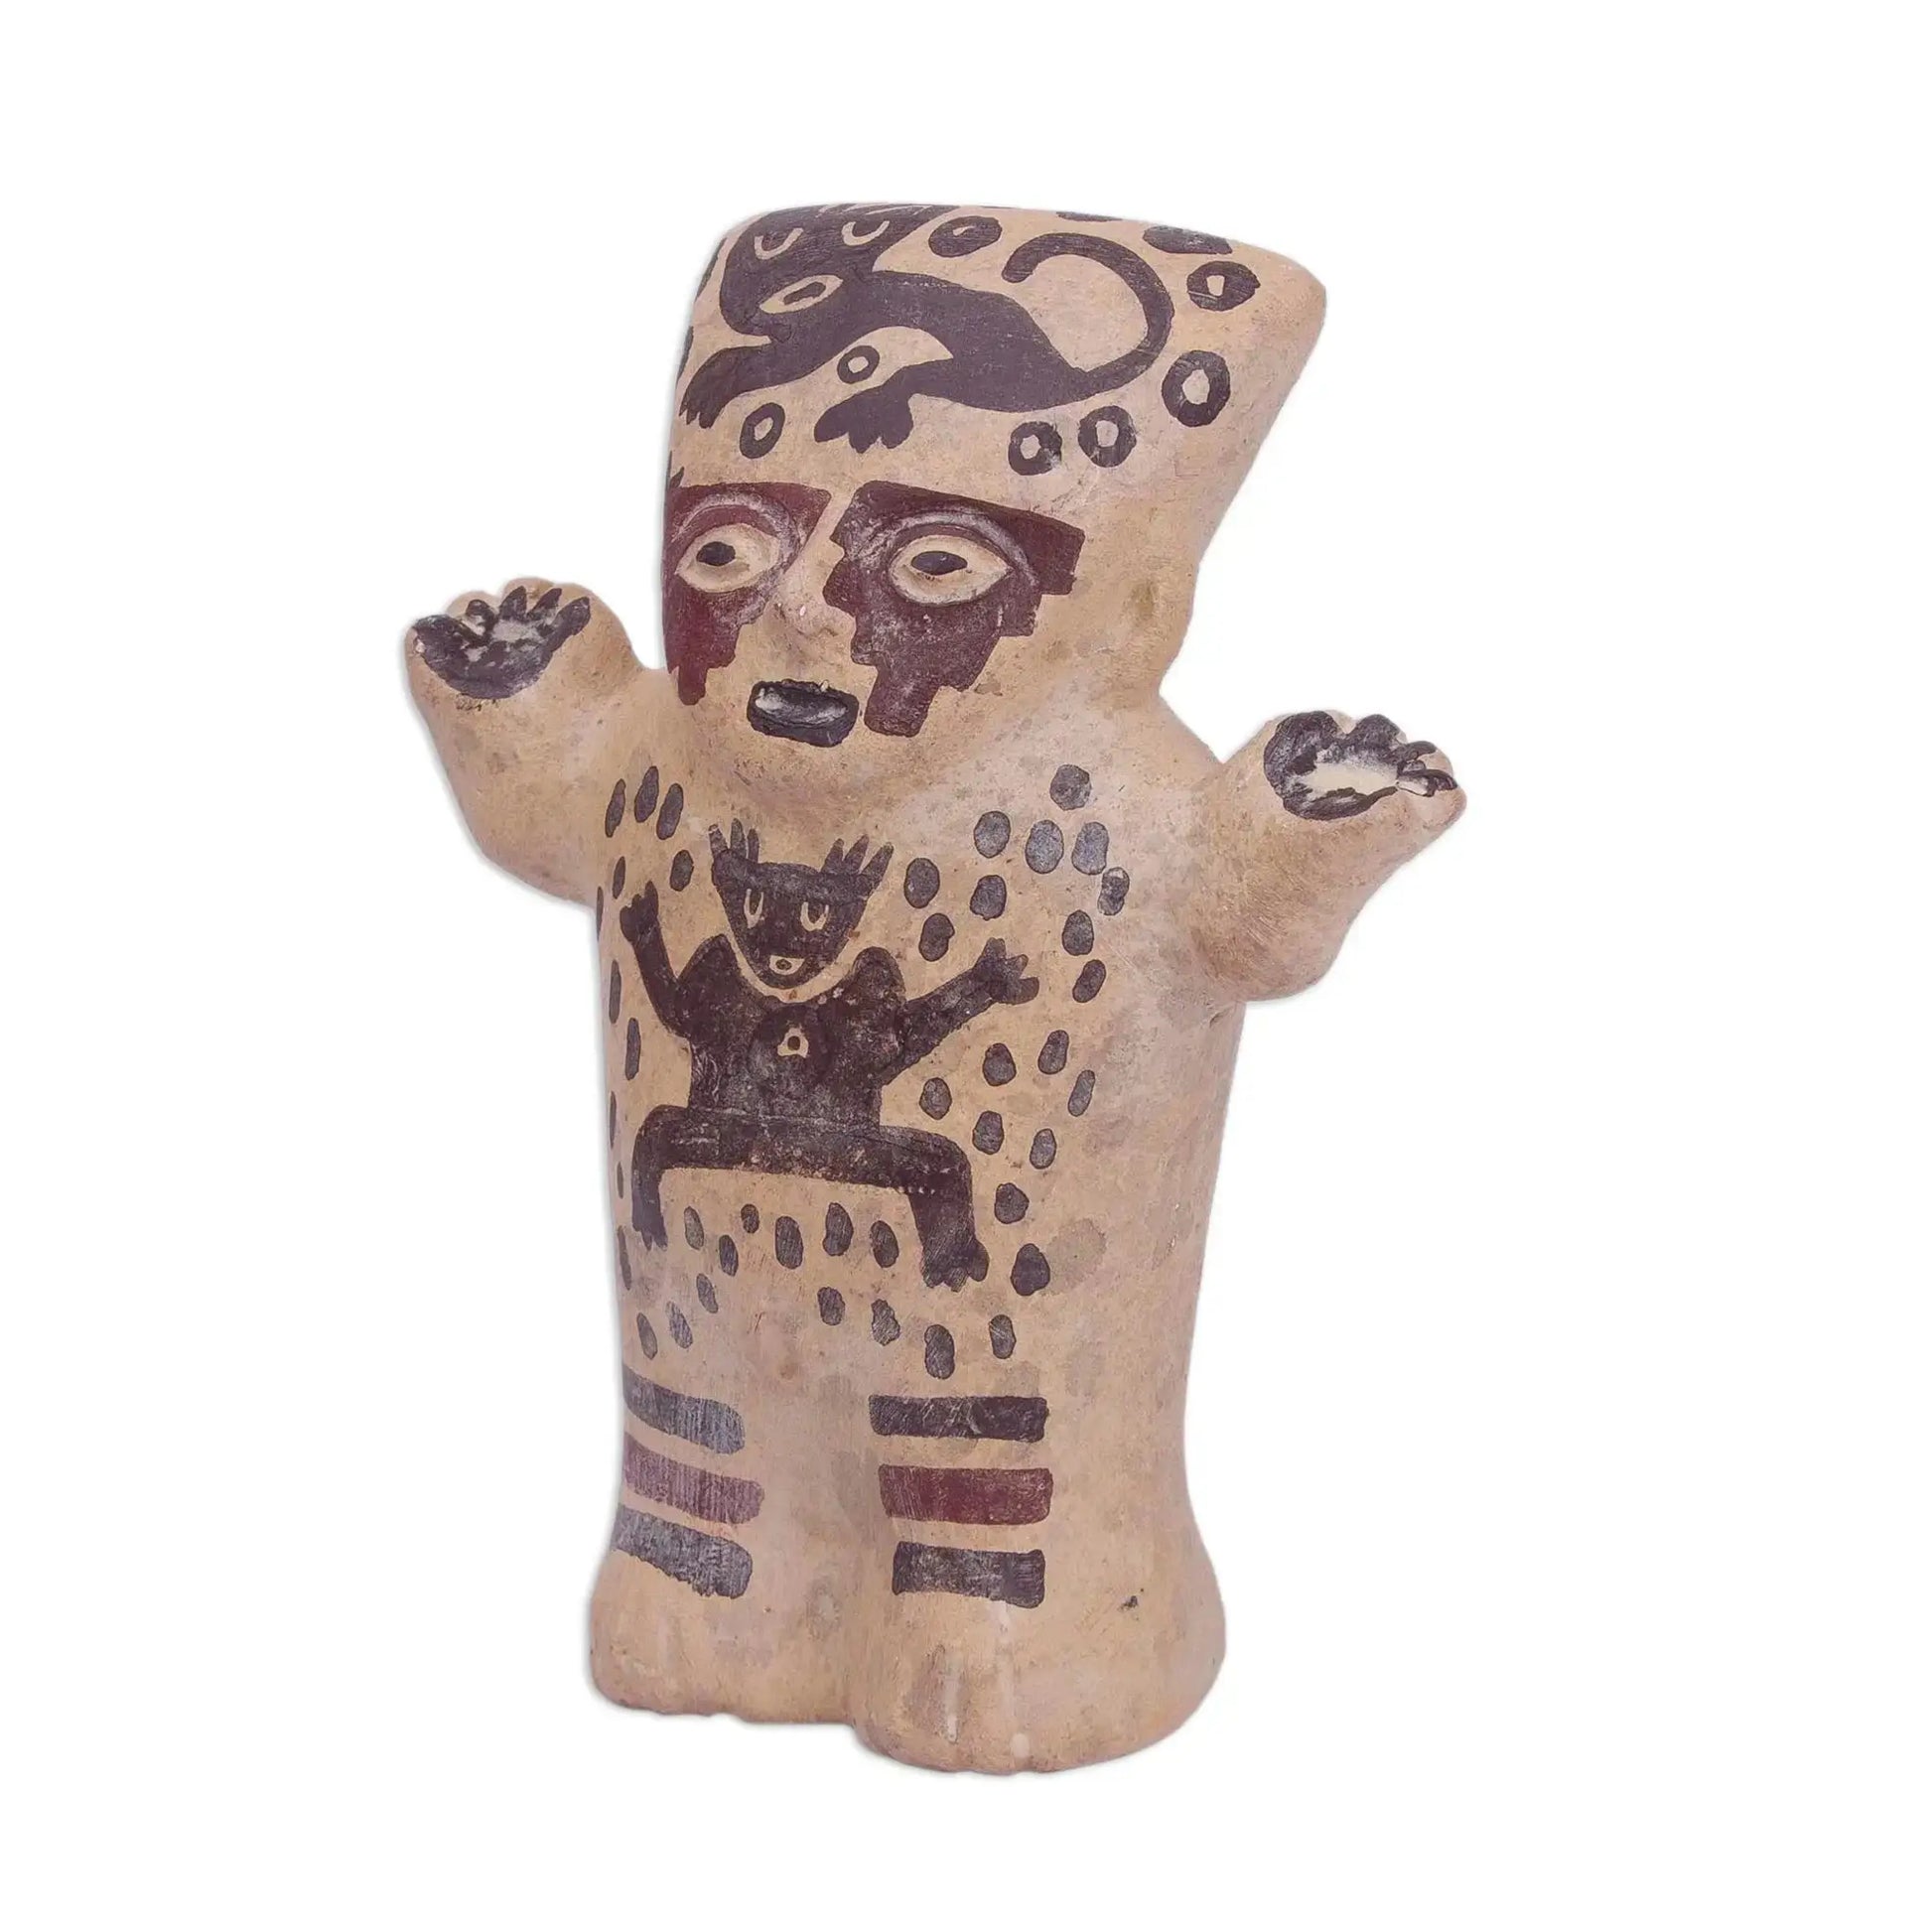 Female Cuchimilco - Archaeological Ceramic Statuette from